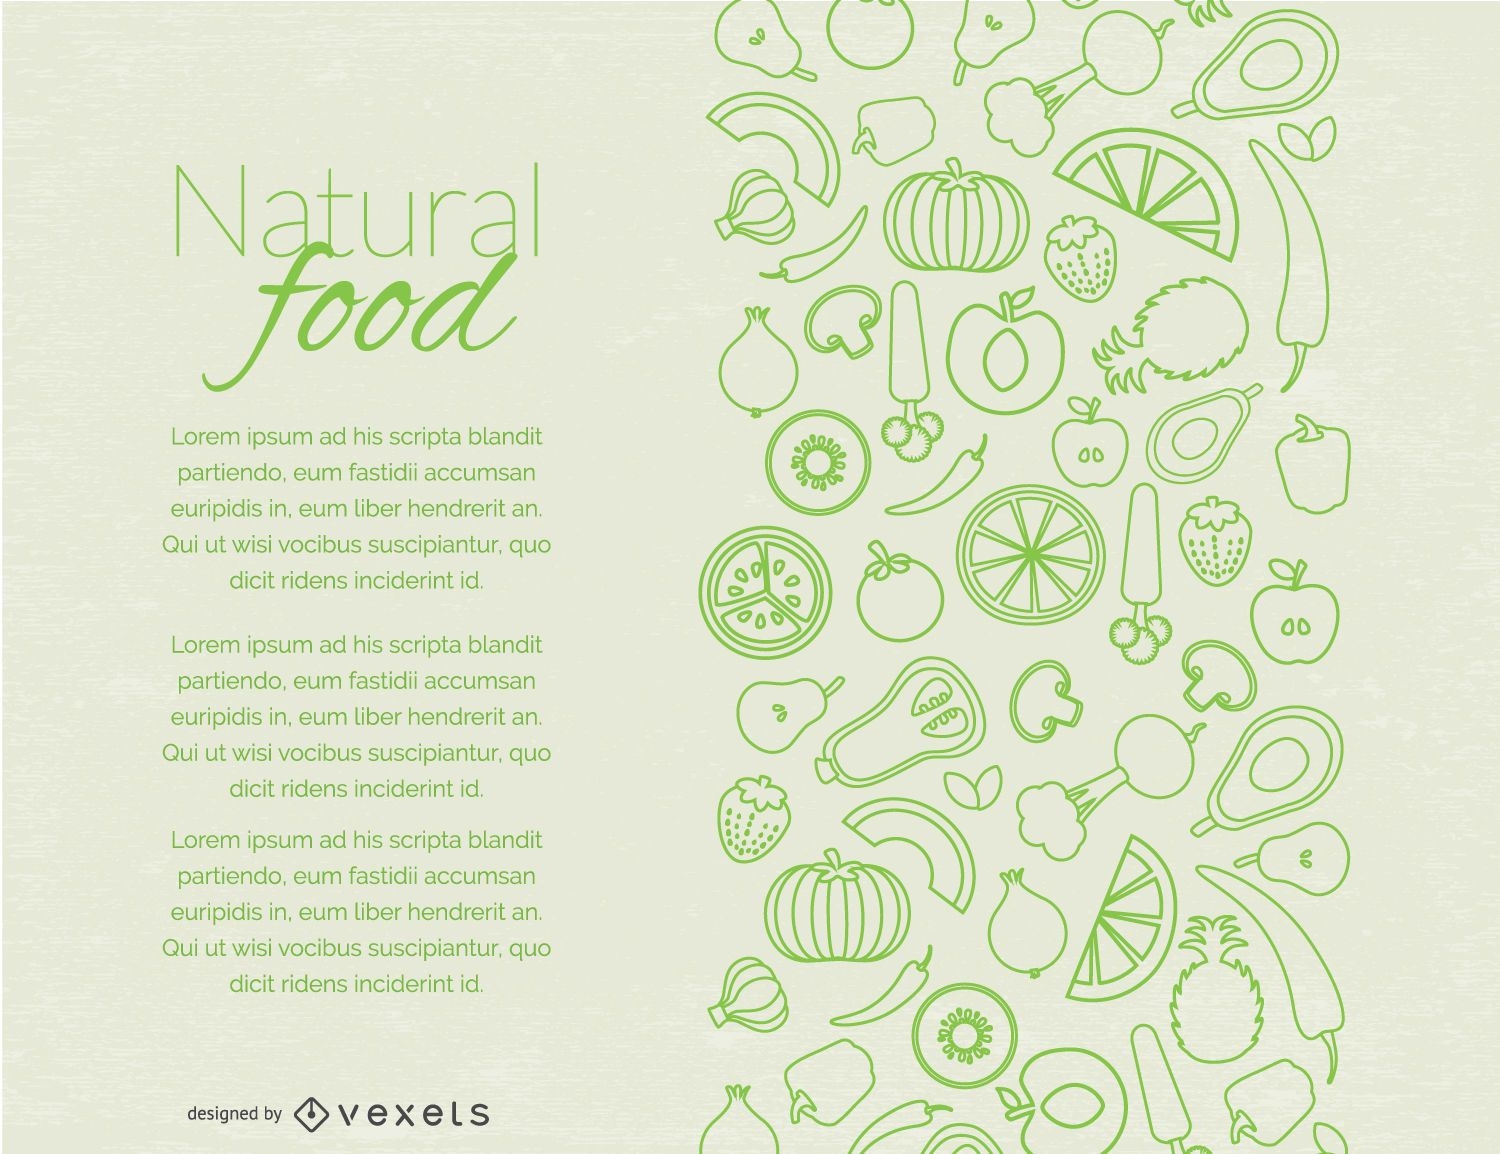 Natural food page design